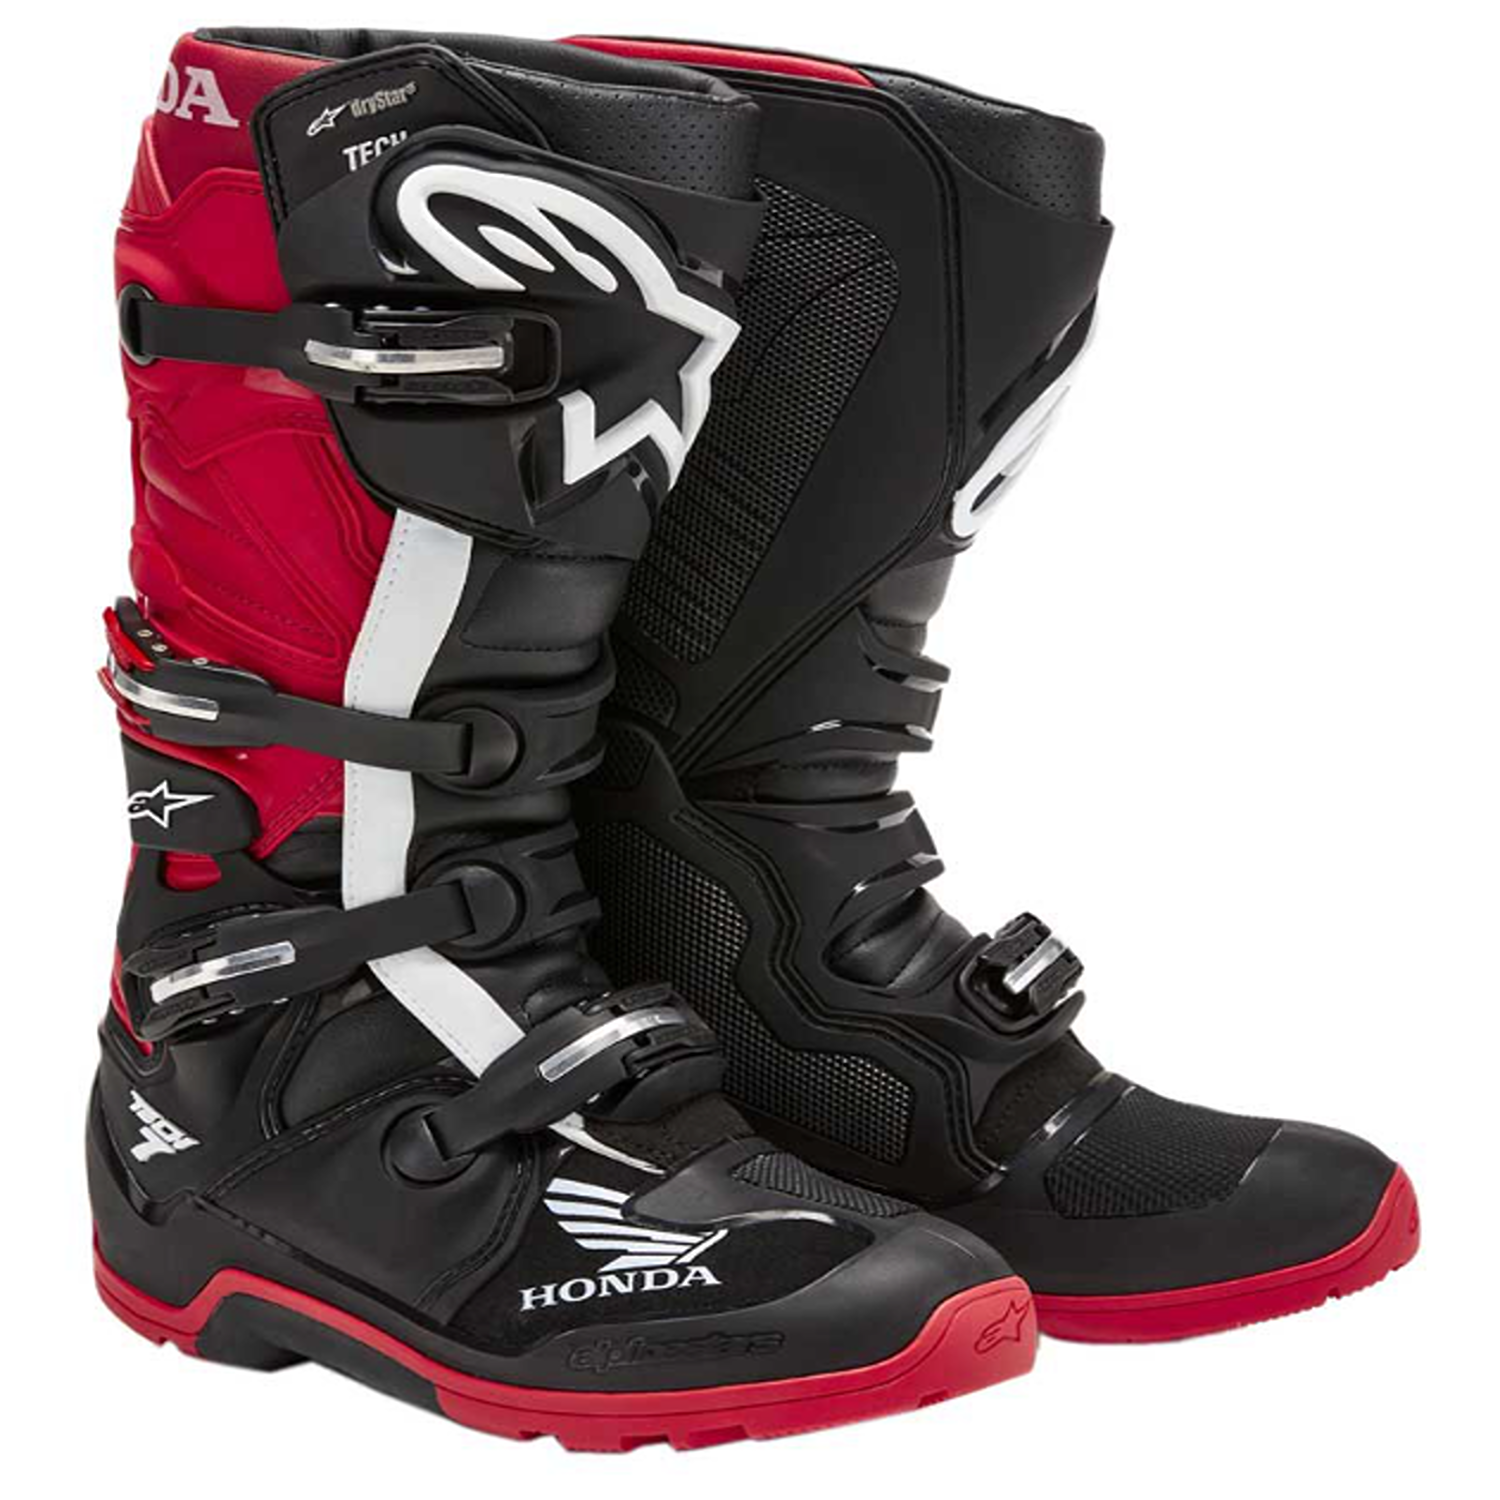 Image of Alpinestars Honda Tech 7 Enduro Drystar Boots Black Bright Red Size US 6 ID 8059347155487